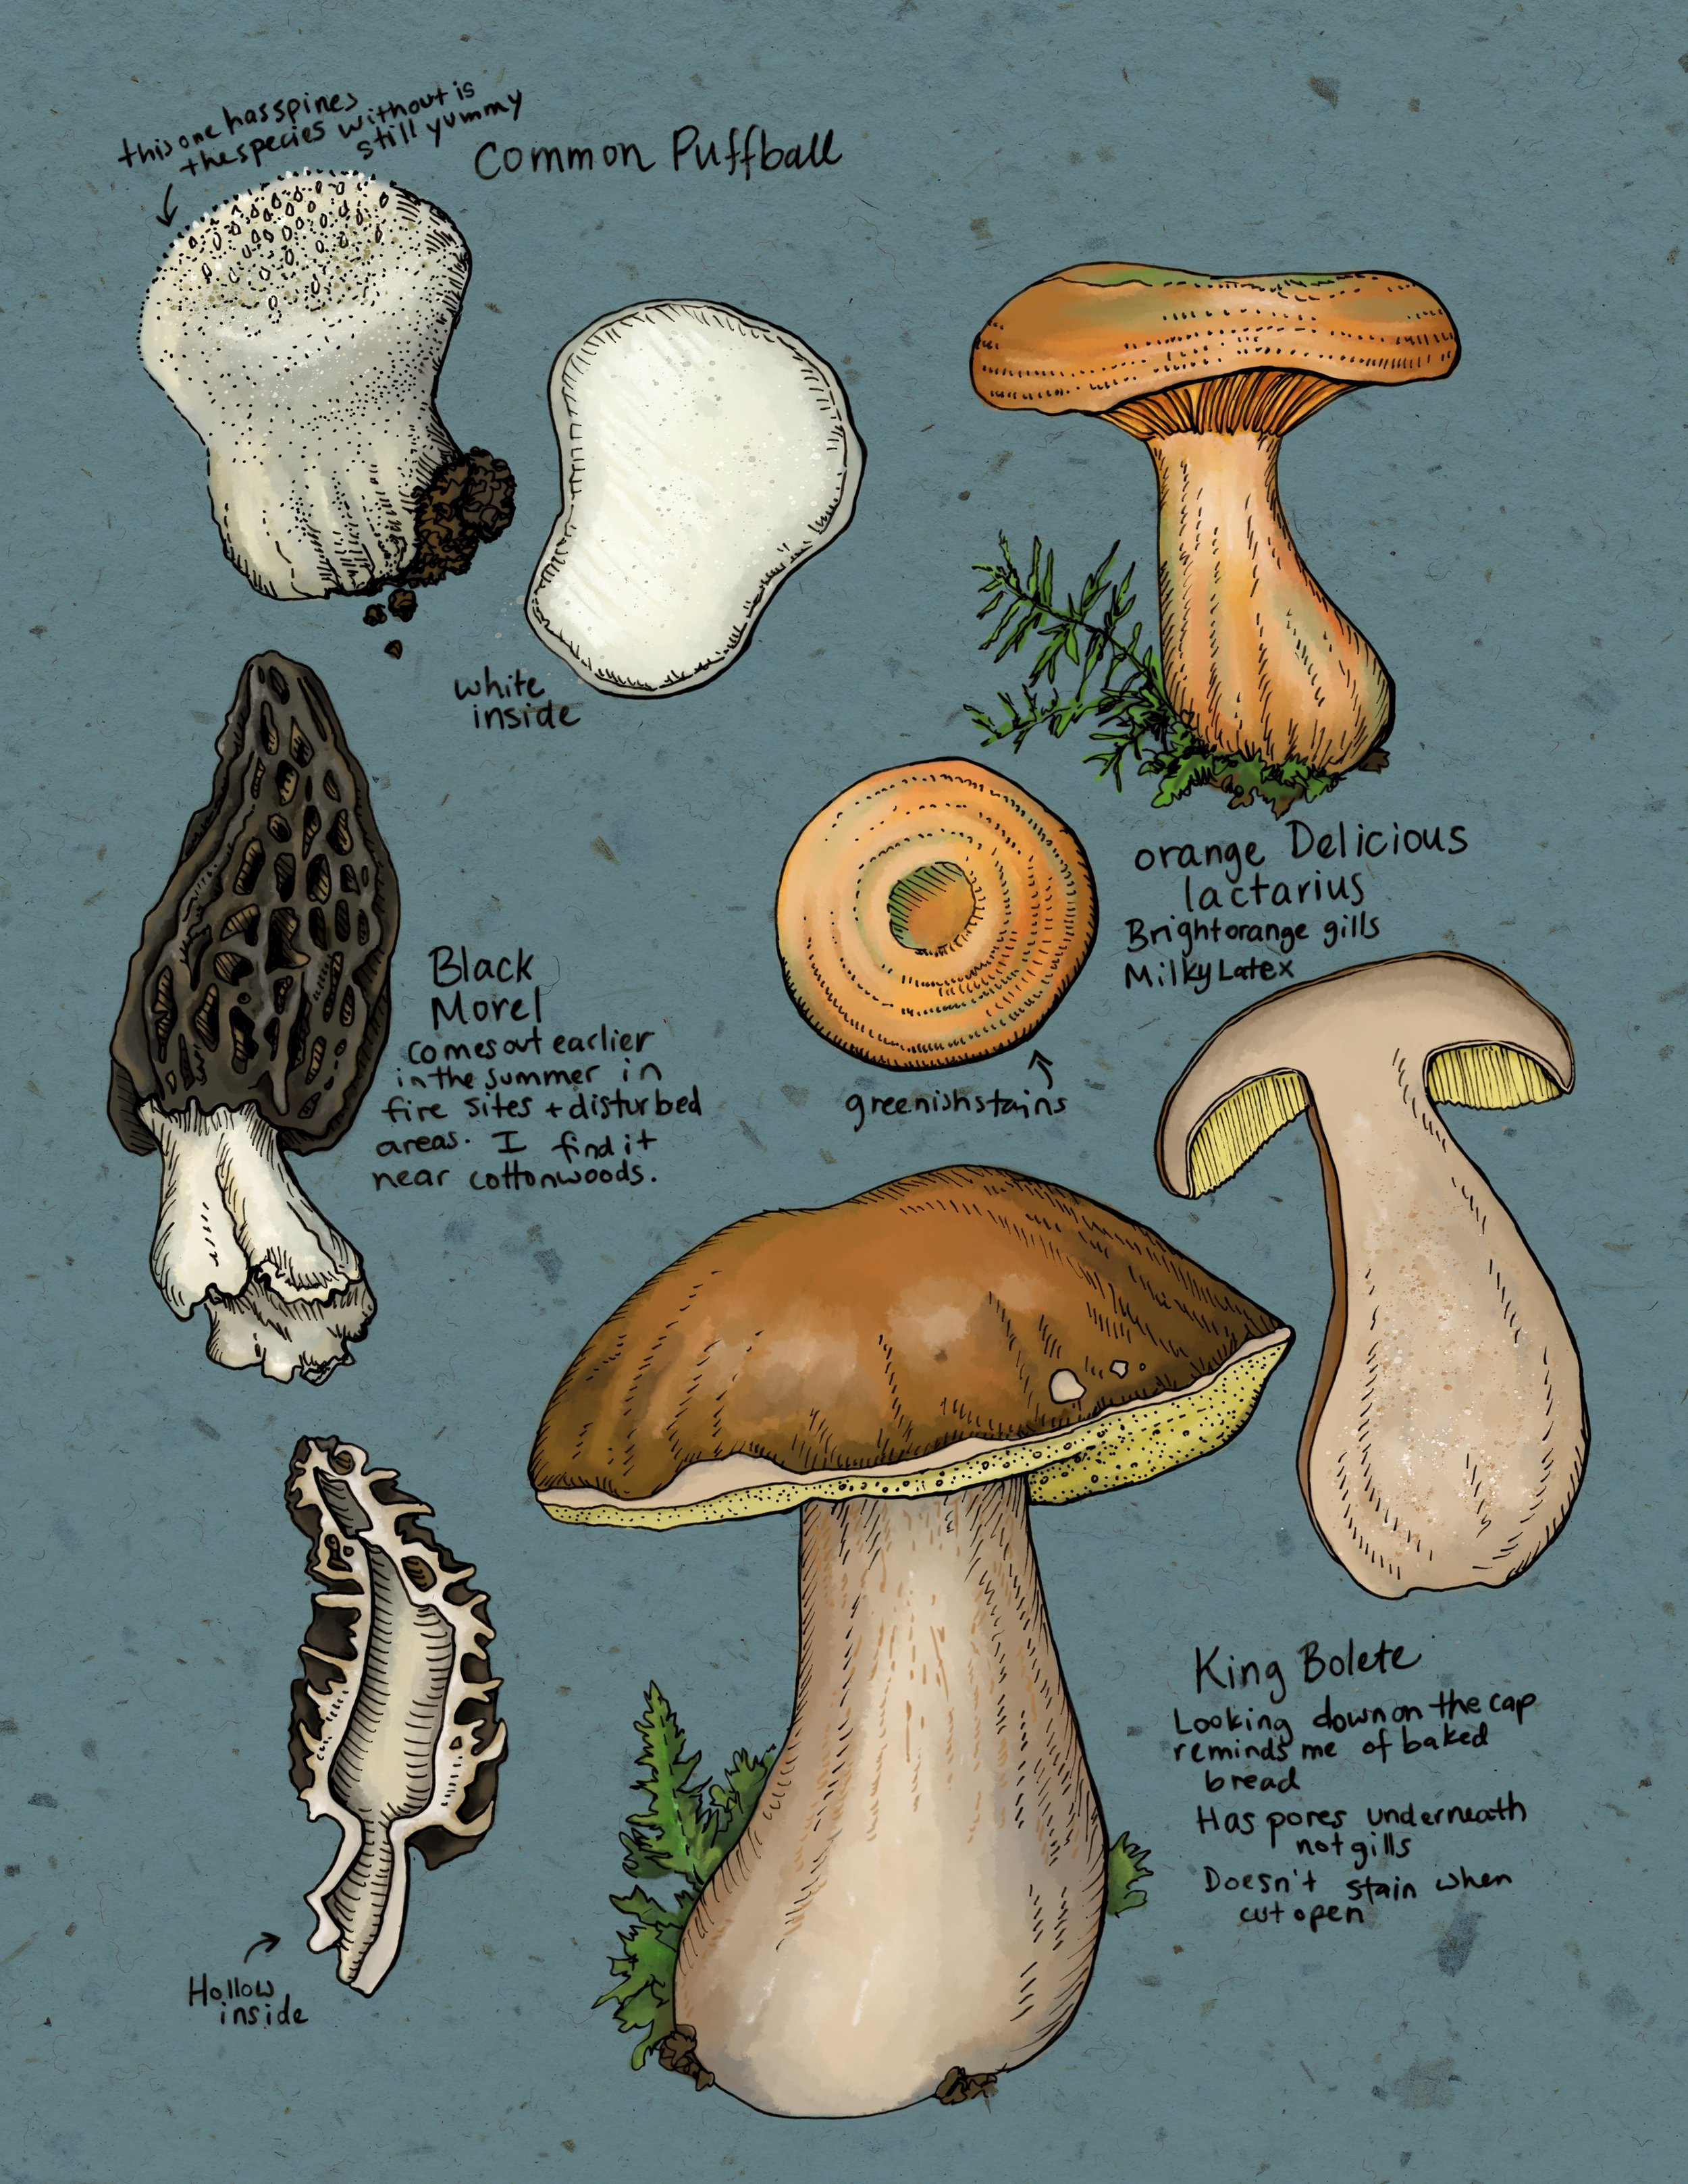 Edible Mushrooms for Edible Alaska Magazine